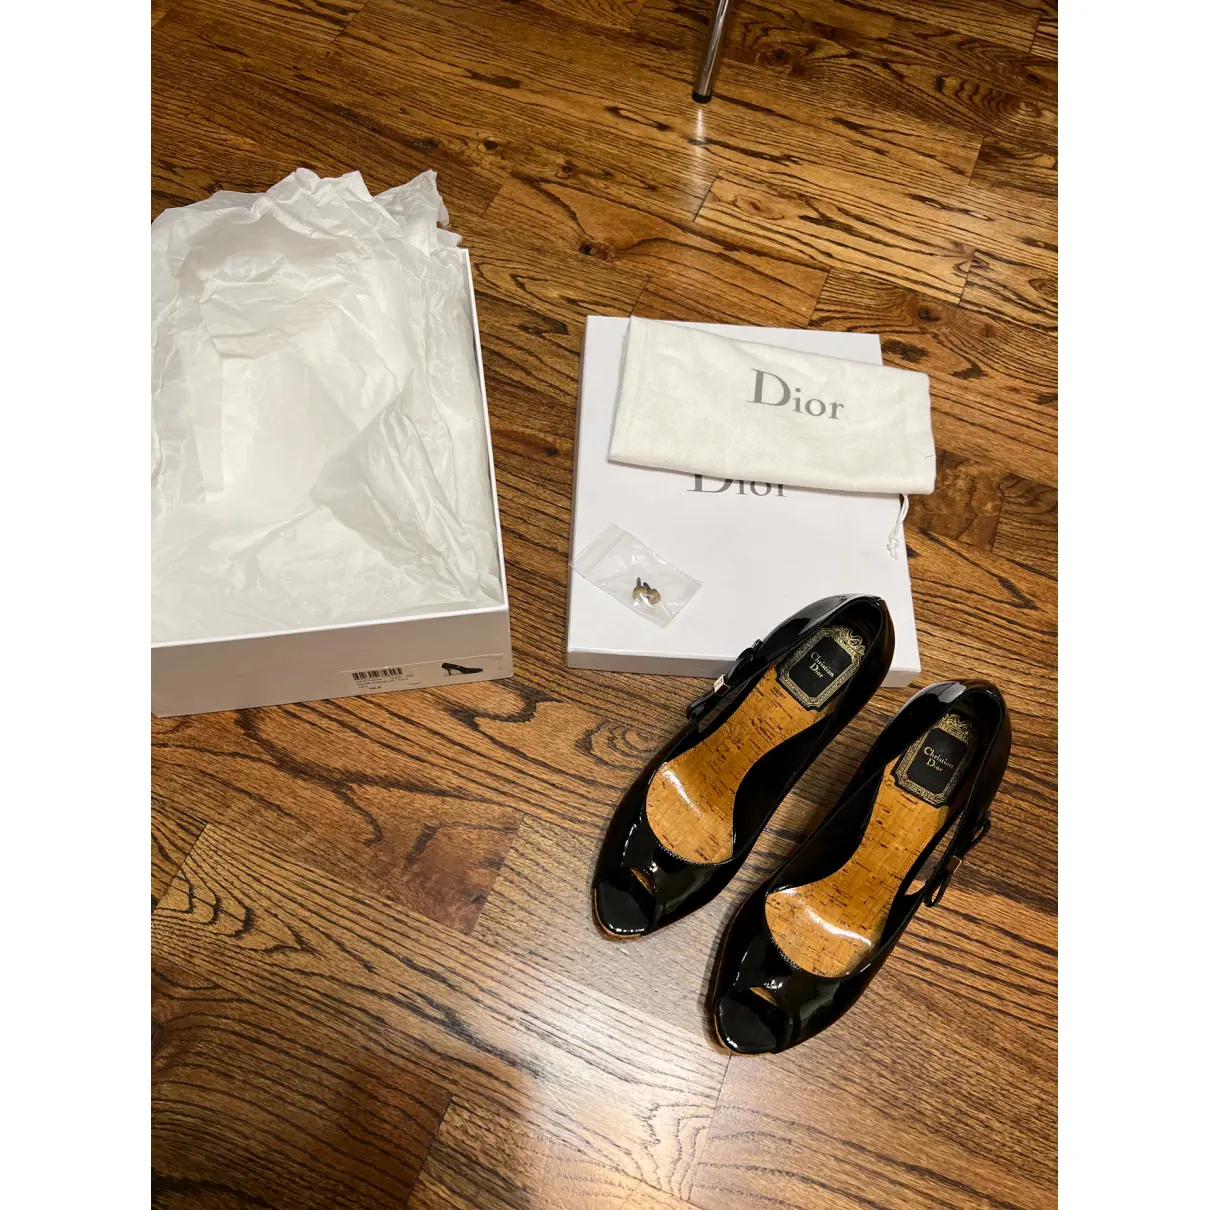 Luxury Christian Dior Heels Women